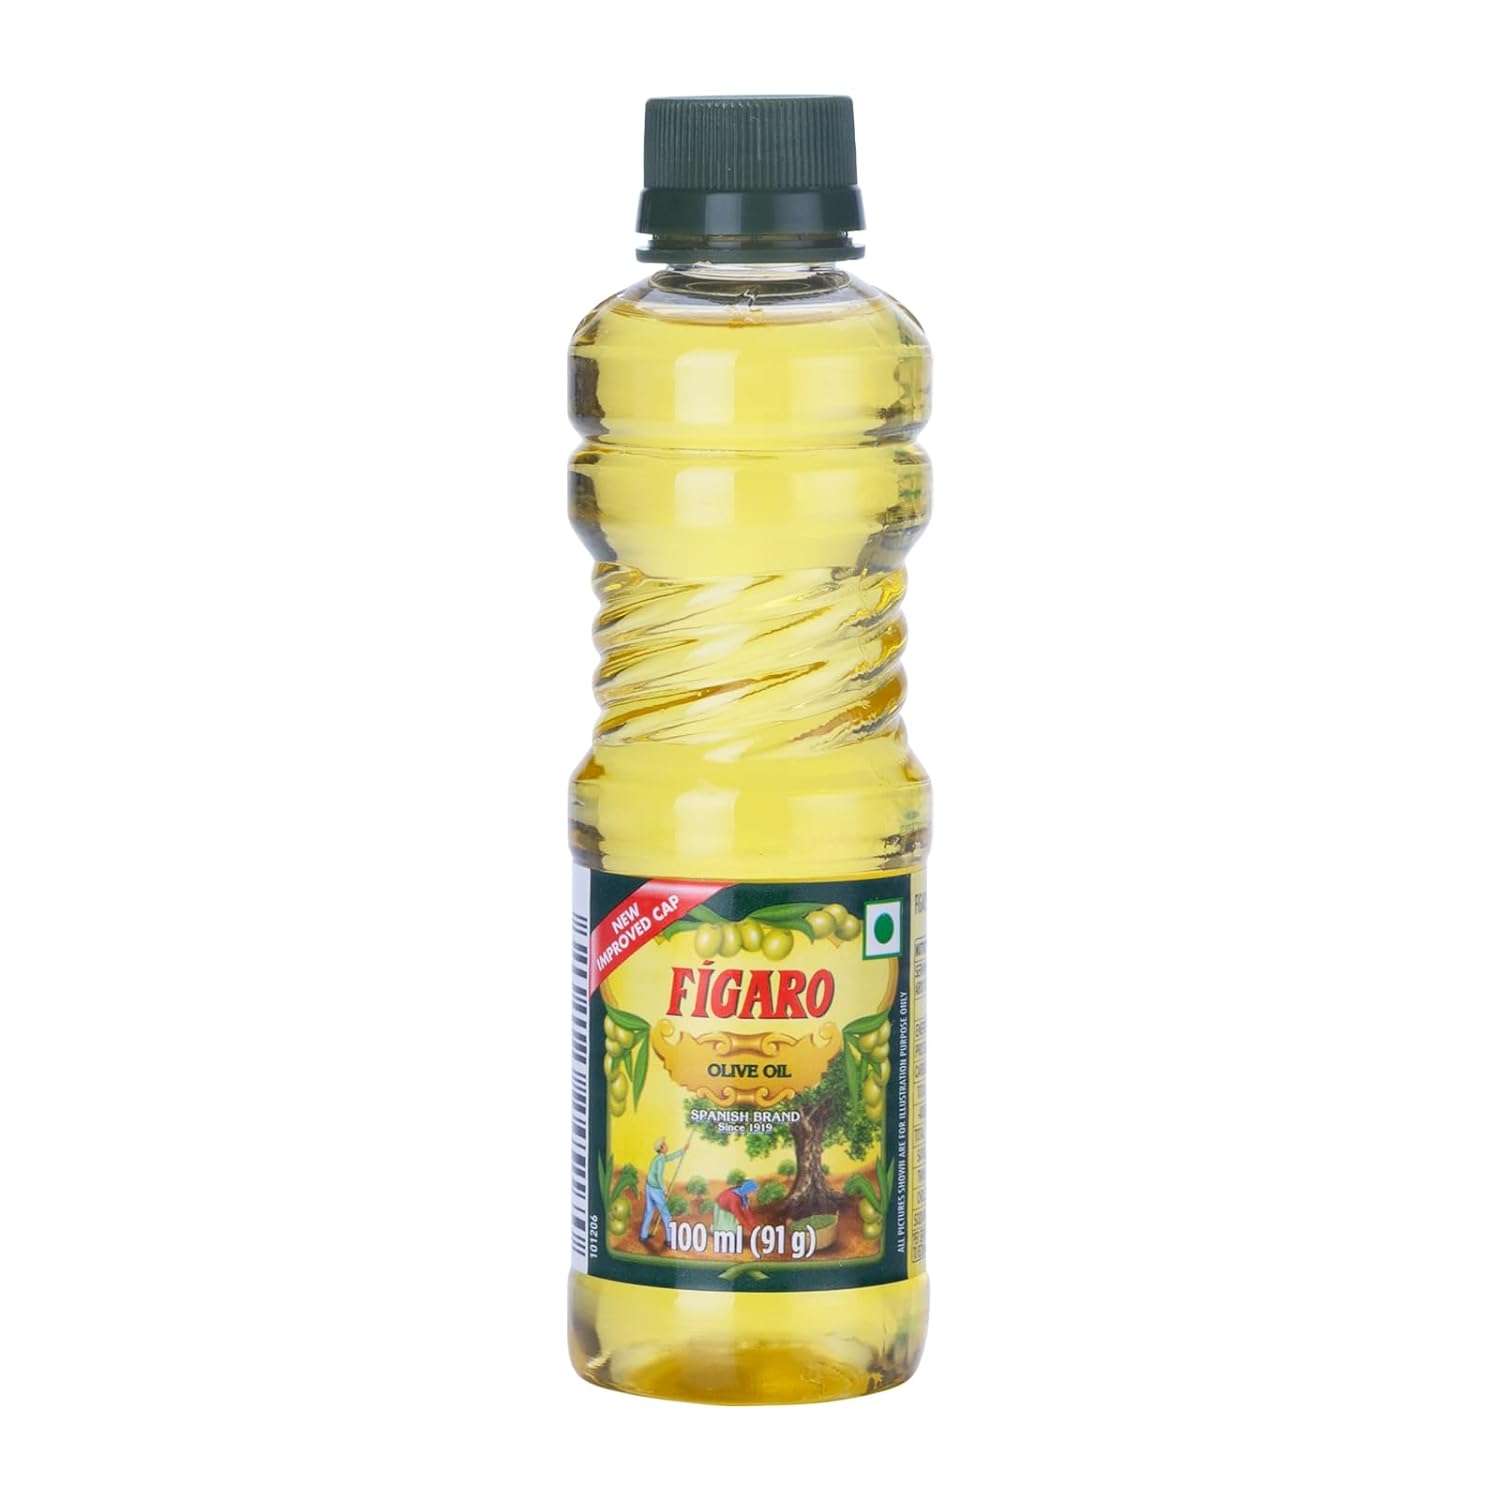 Figaro Olive Oil- Pure Olive Oil - 100ml Bottle